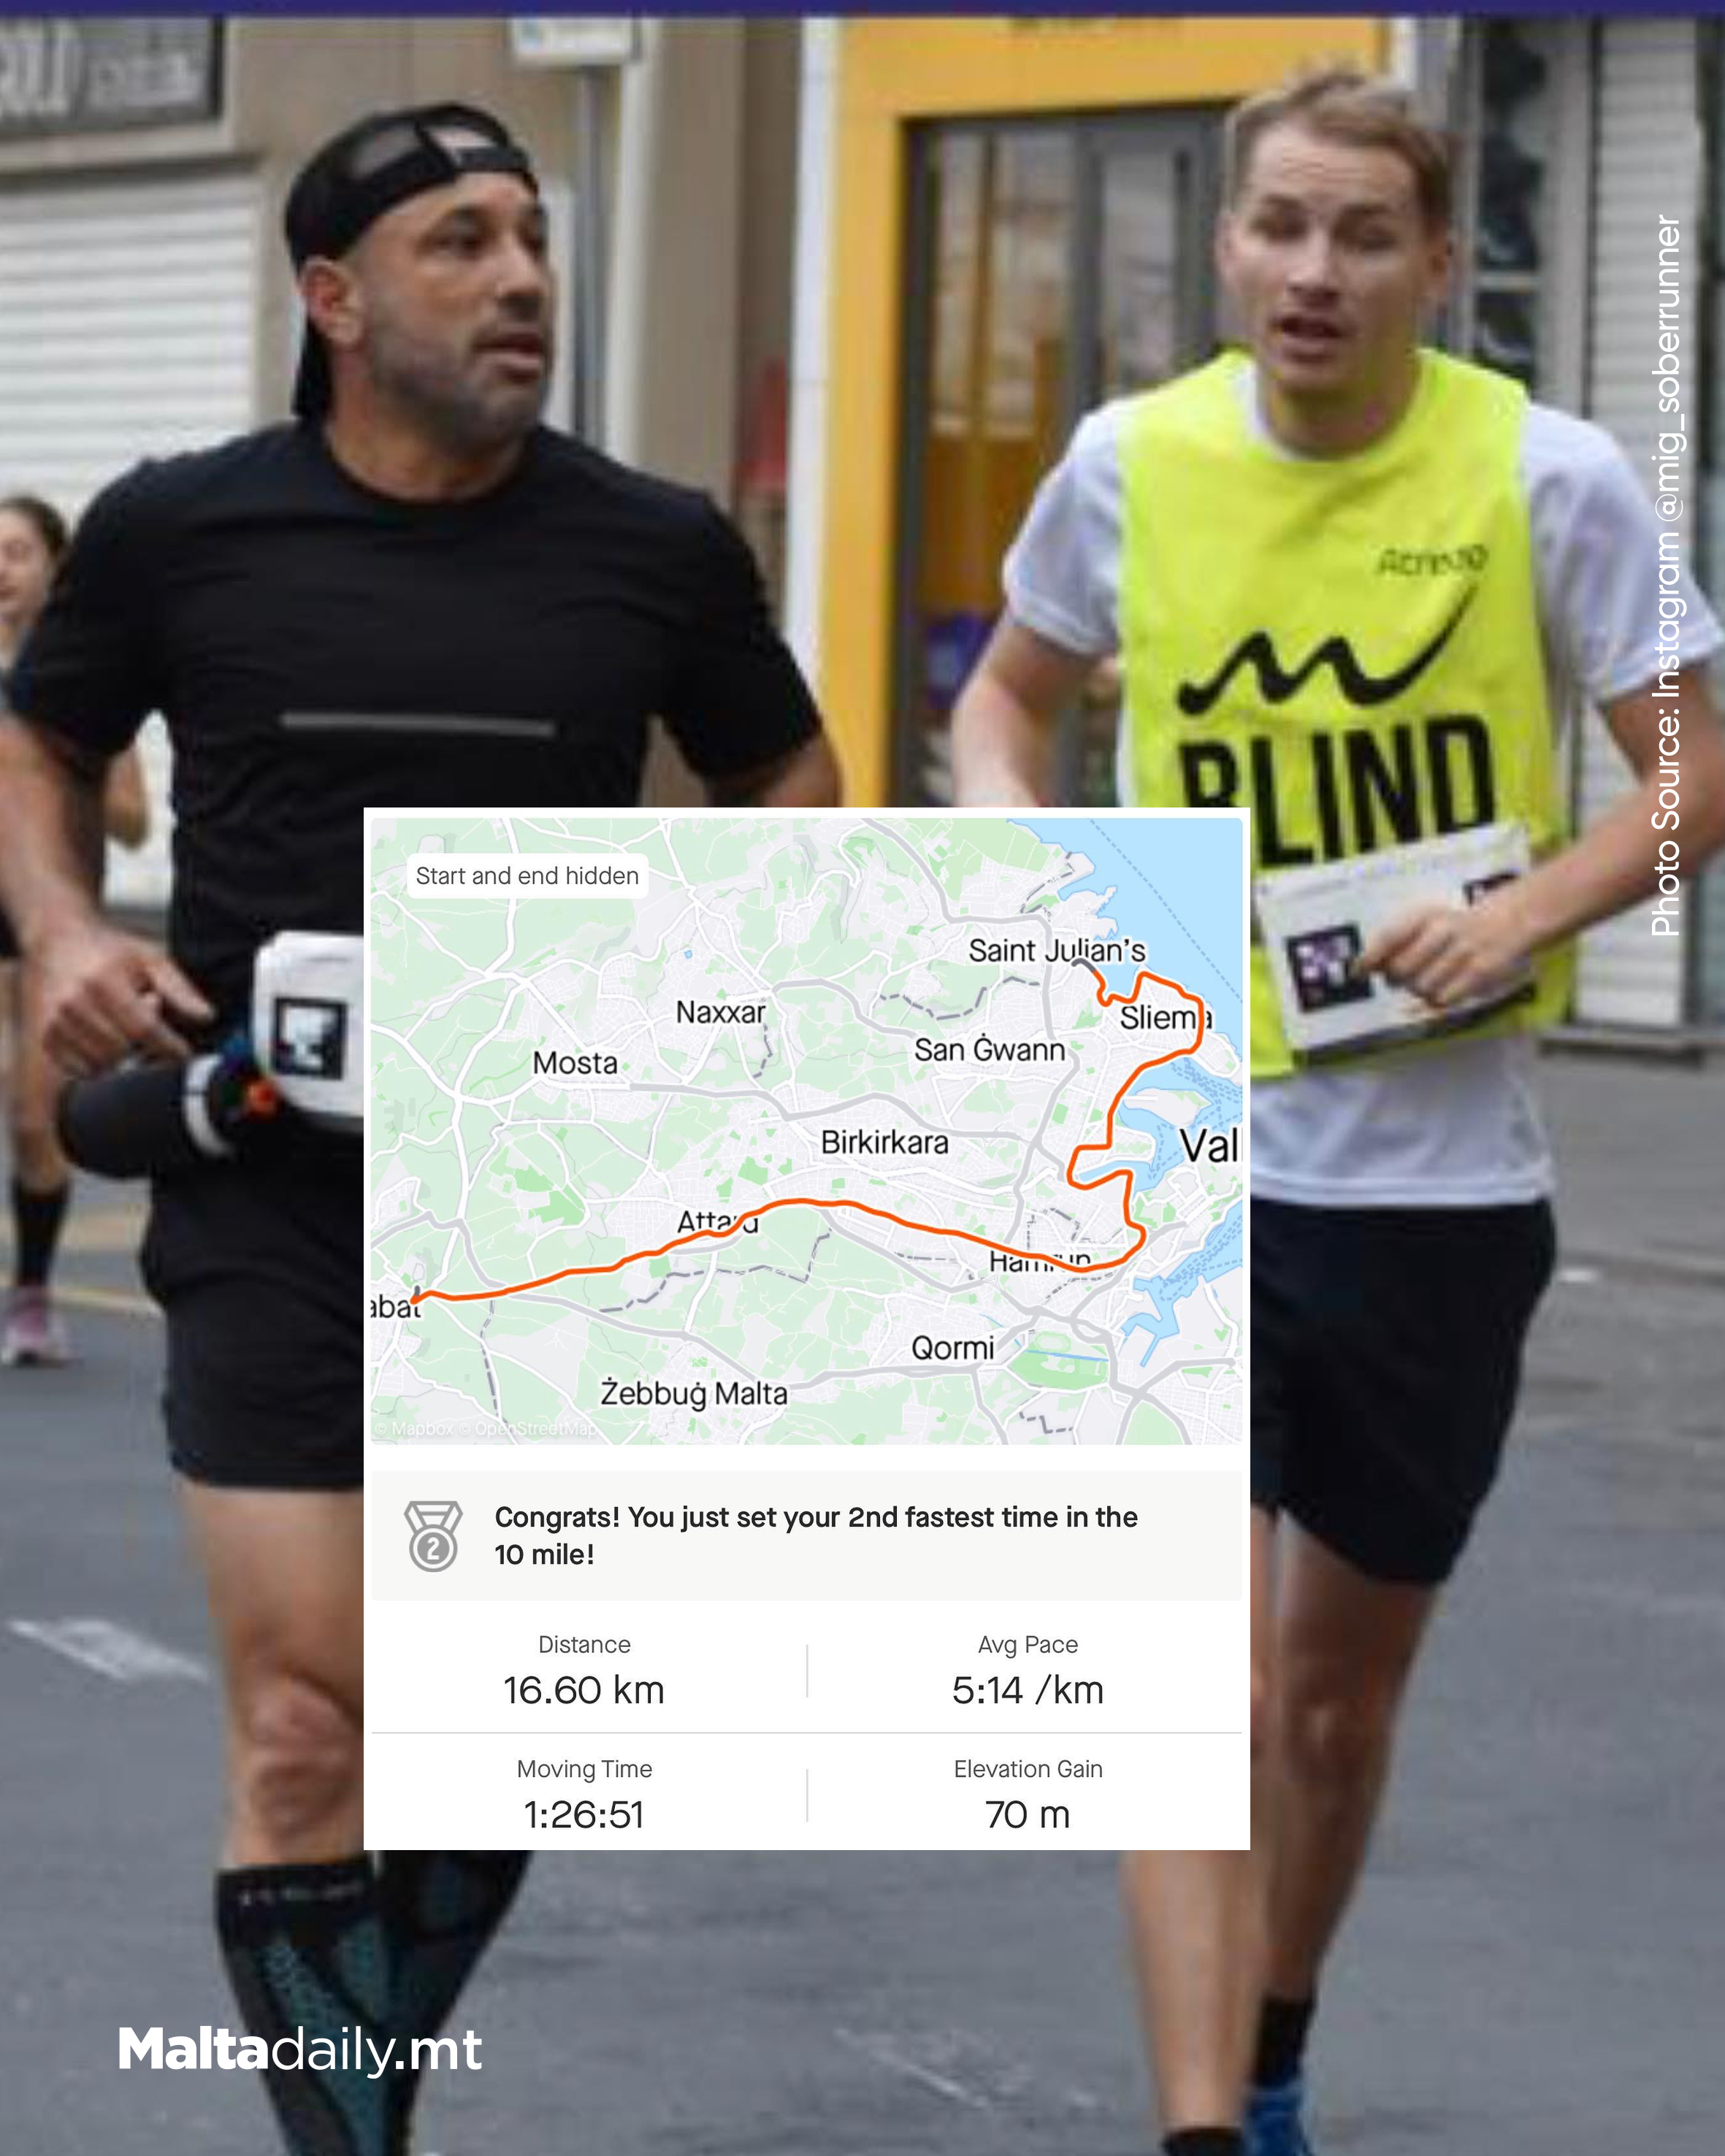 Miguel and Jesper's Inspiring Mdina 2 Spinola Marathon Journey